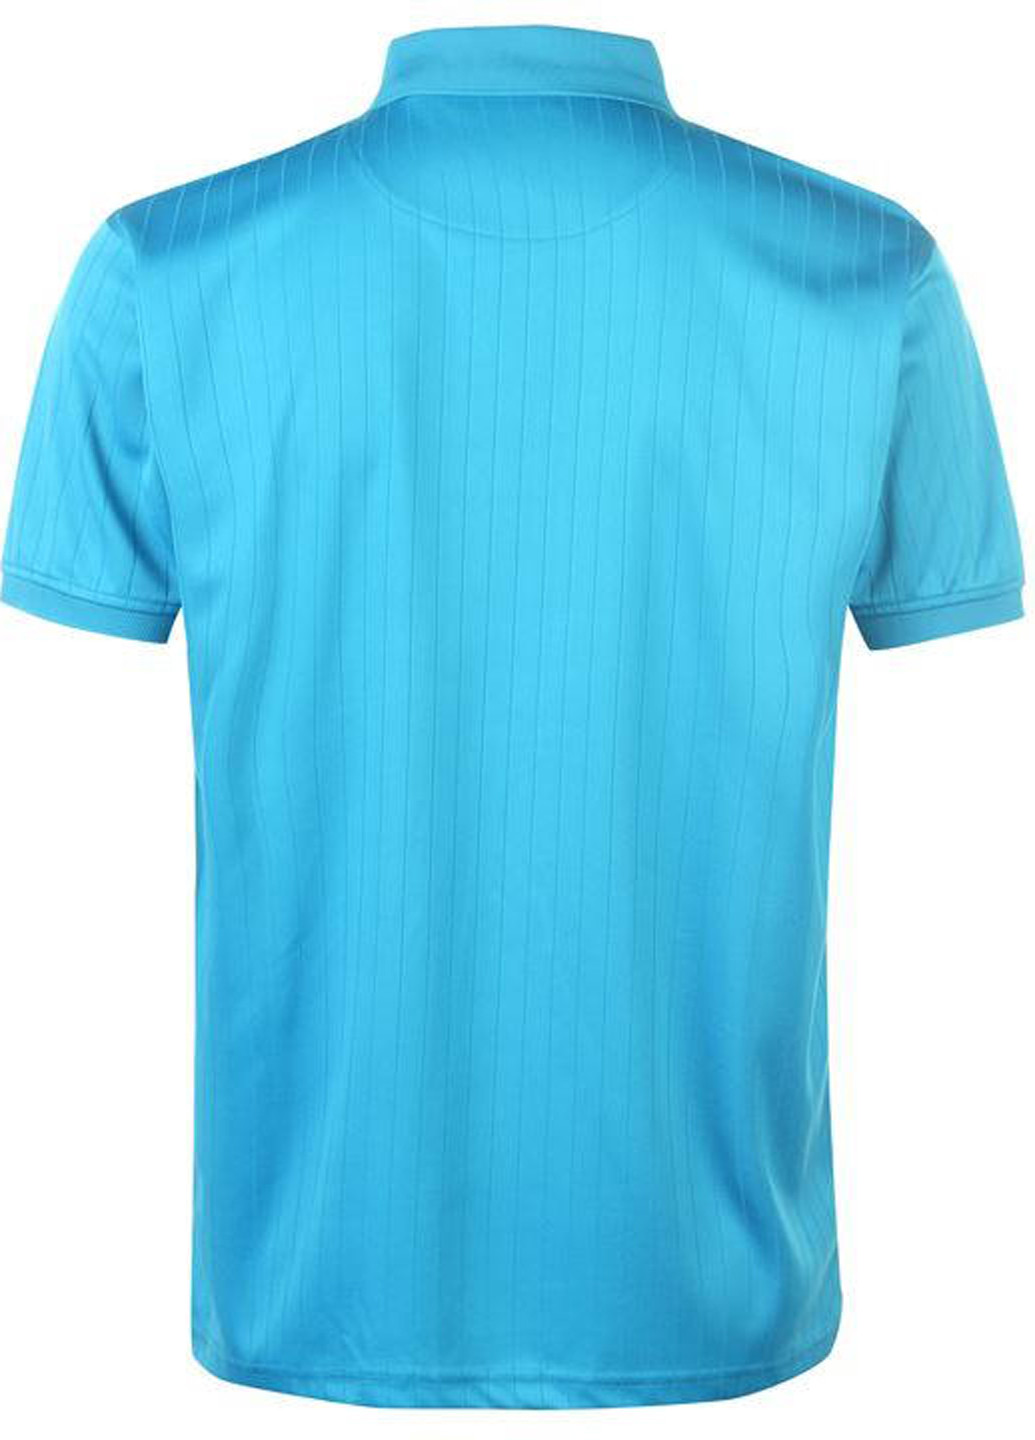 Голубой футболка-поло для мужчин Pierre Cardin с логотипом